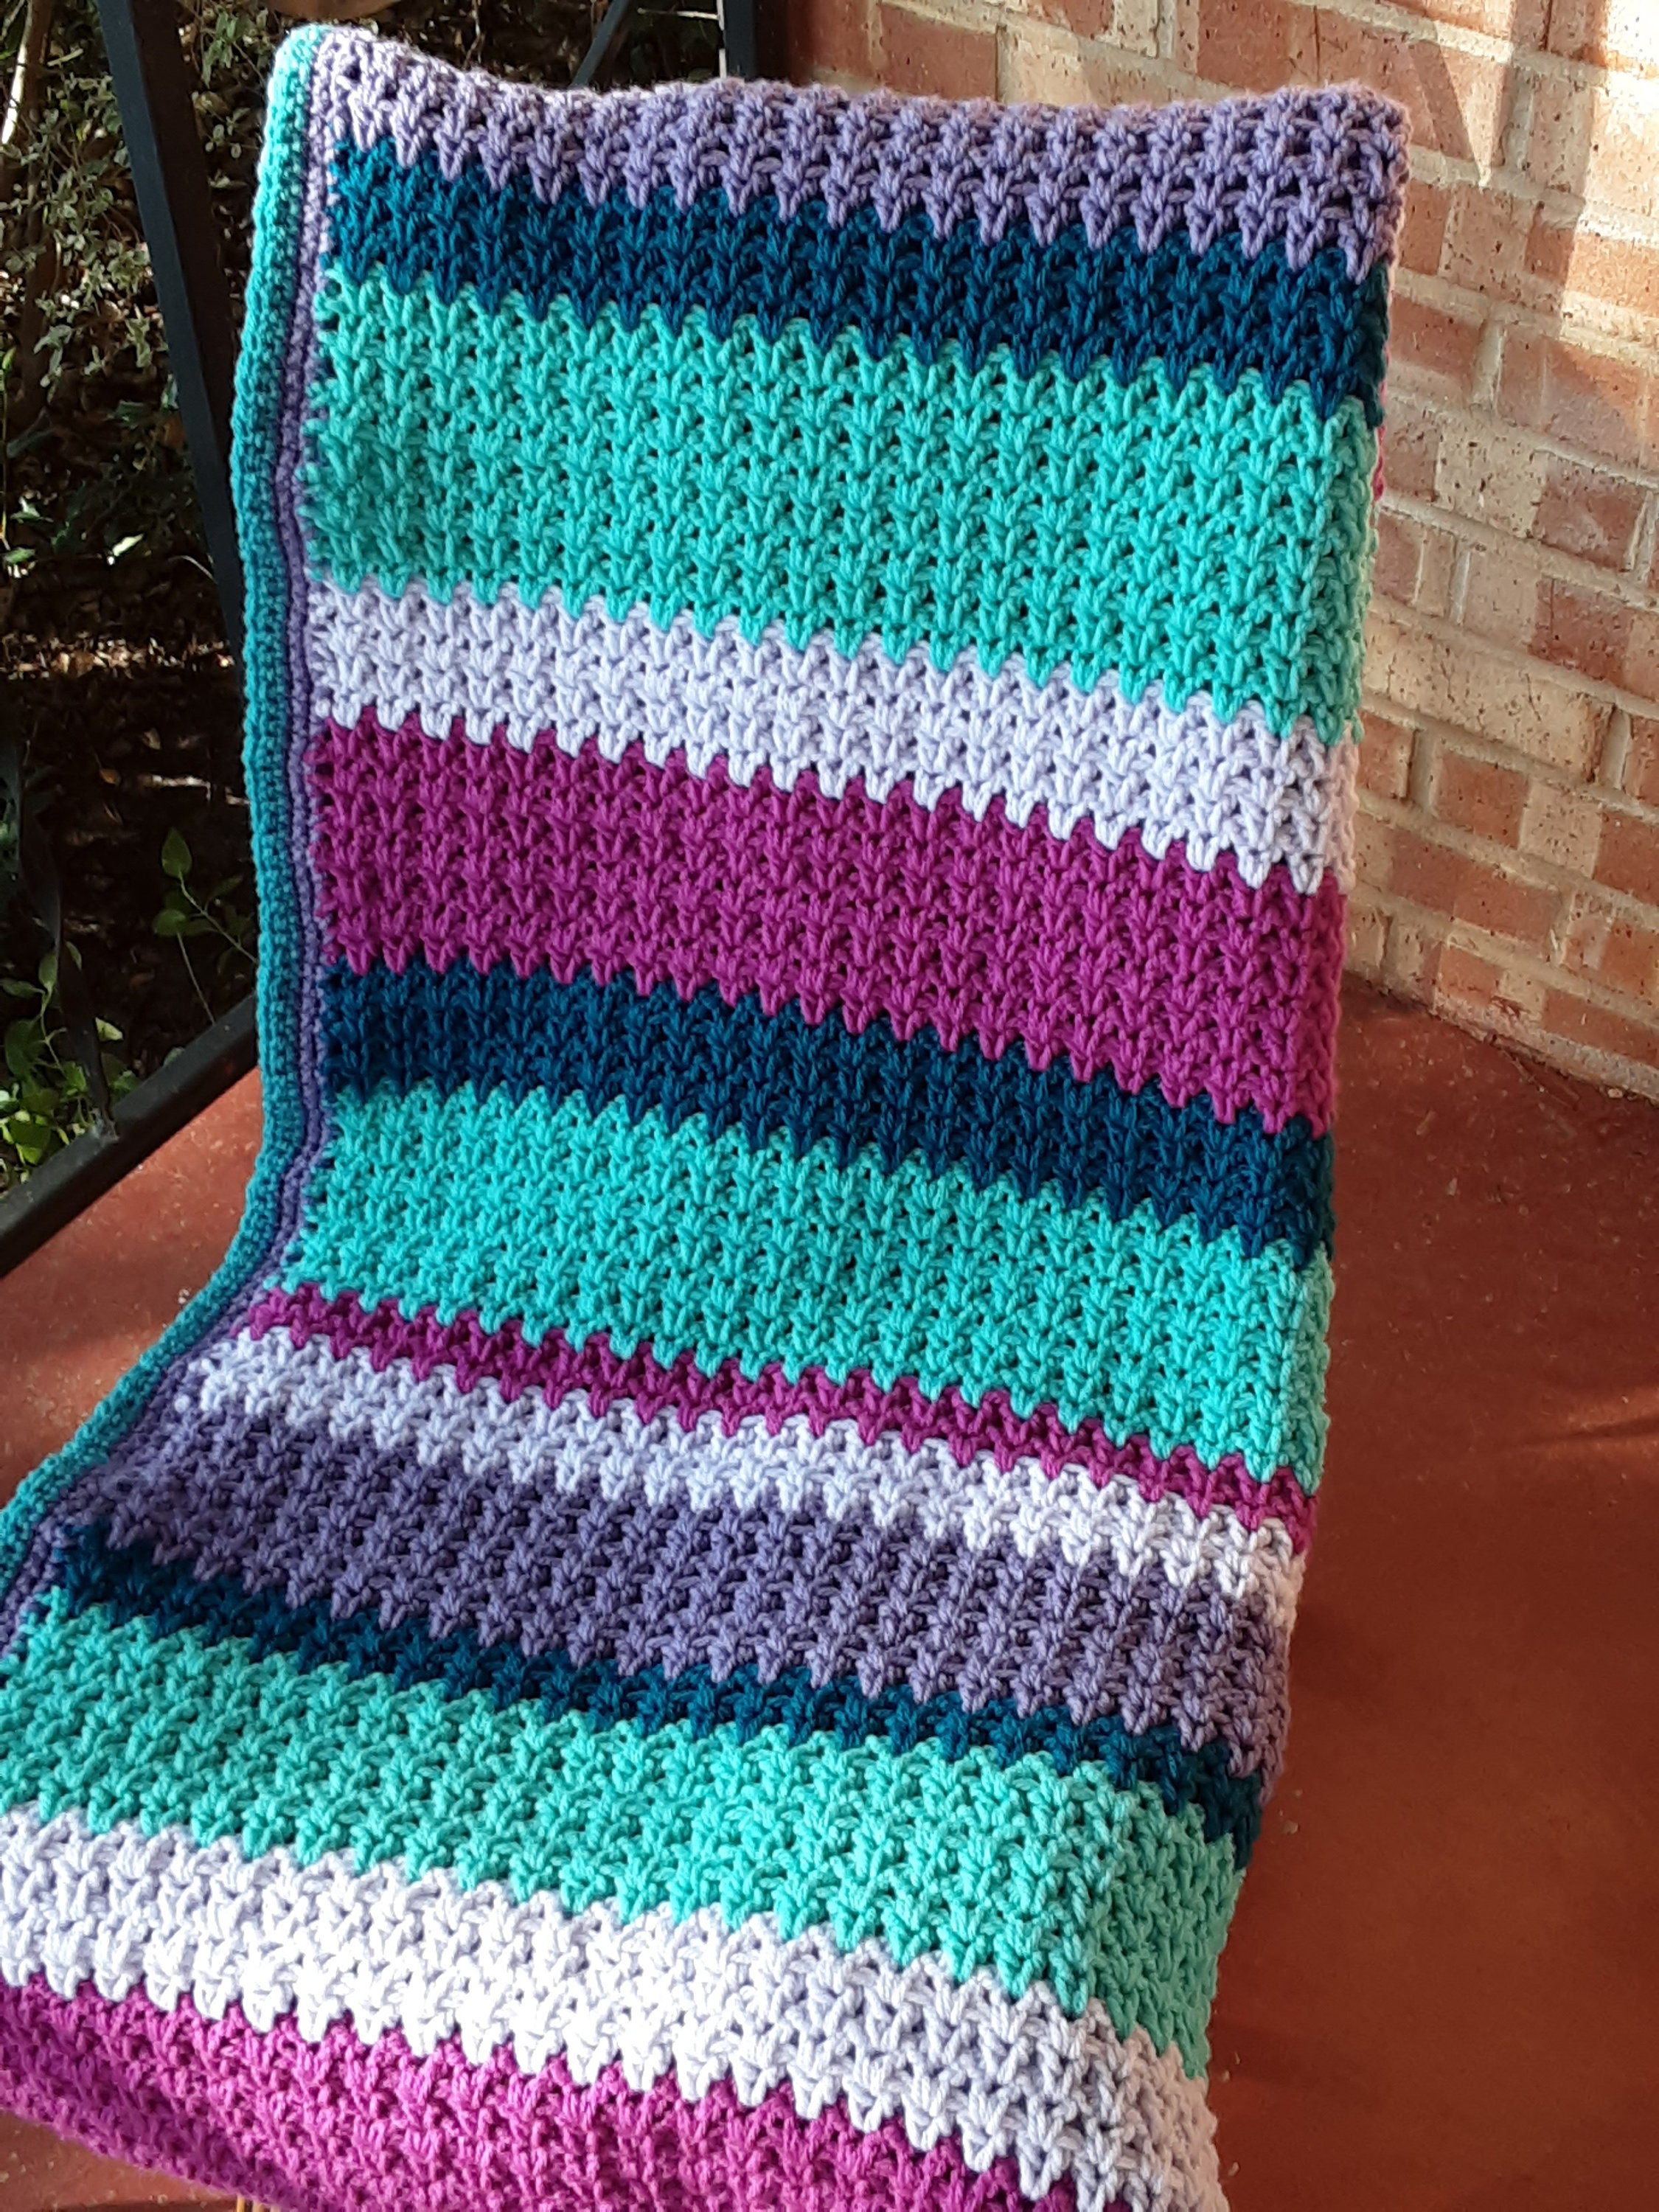 Sofa throw, handmade large crochet, multi color striped afghan, Ready to ship